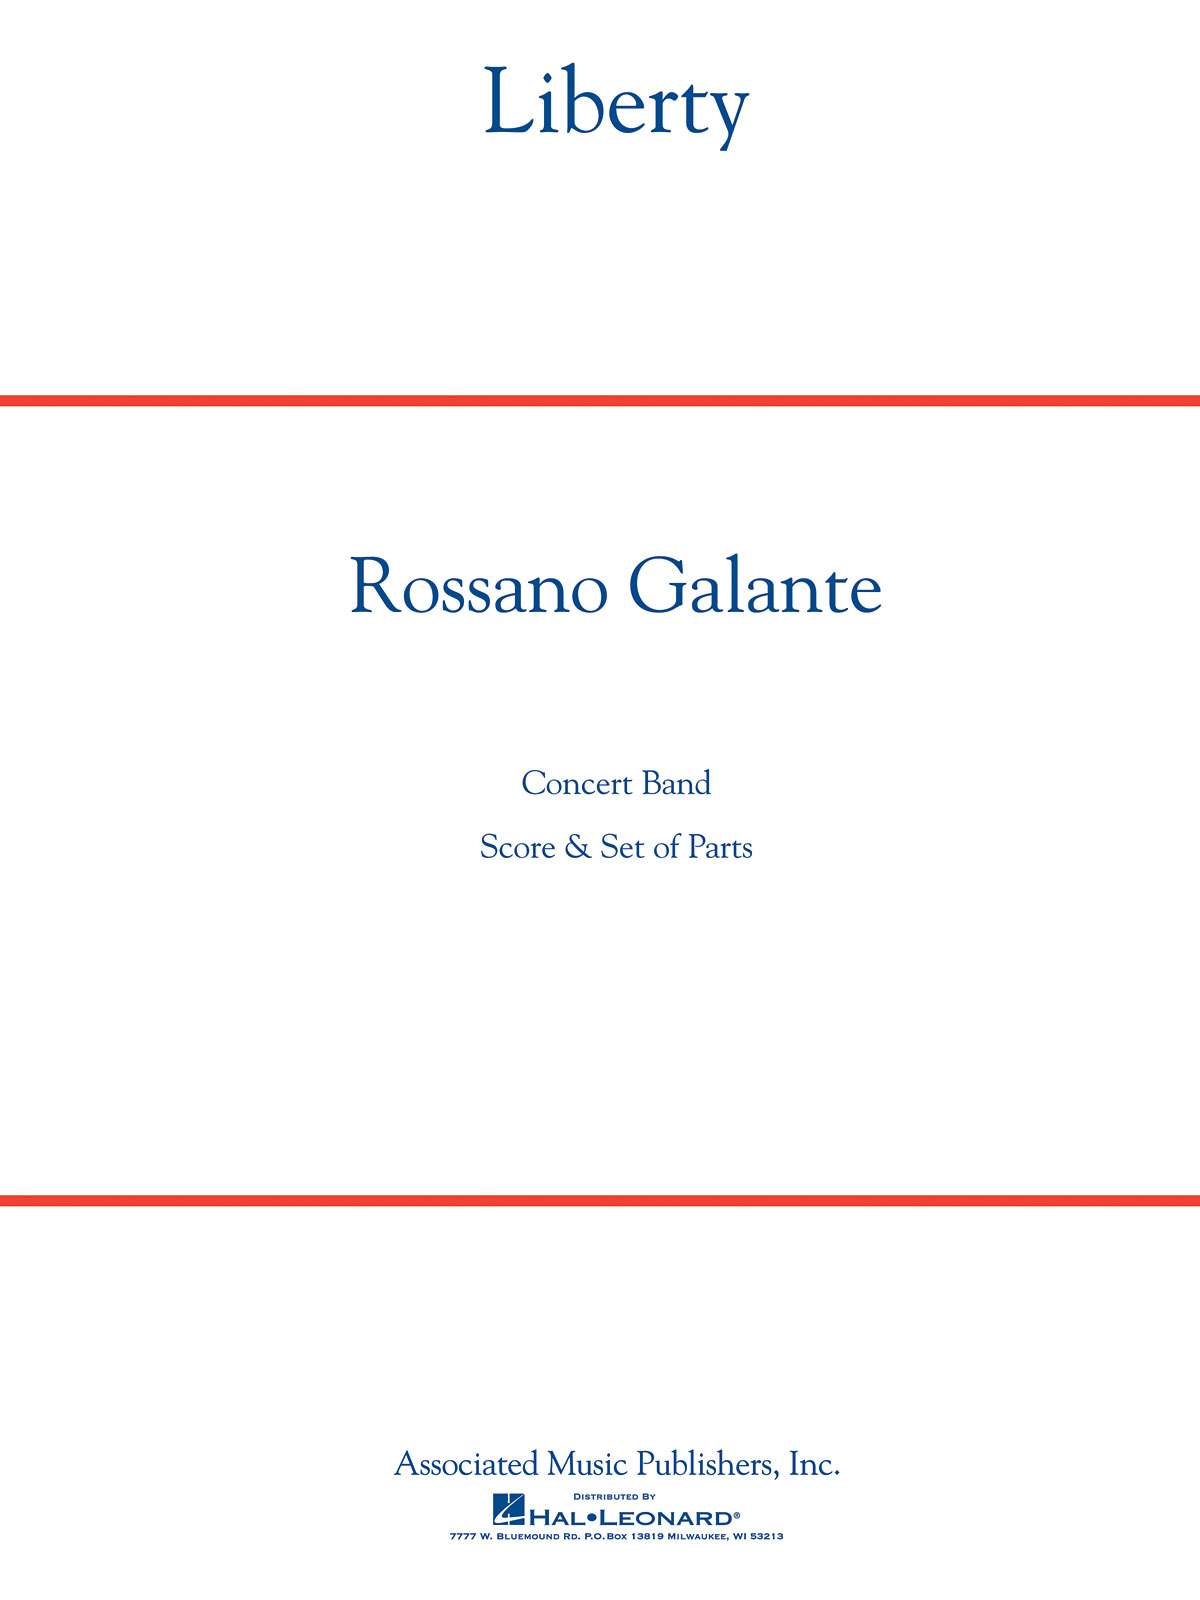 Rossano Galante: Liberty: Concert Band: Score & Parts